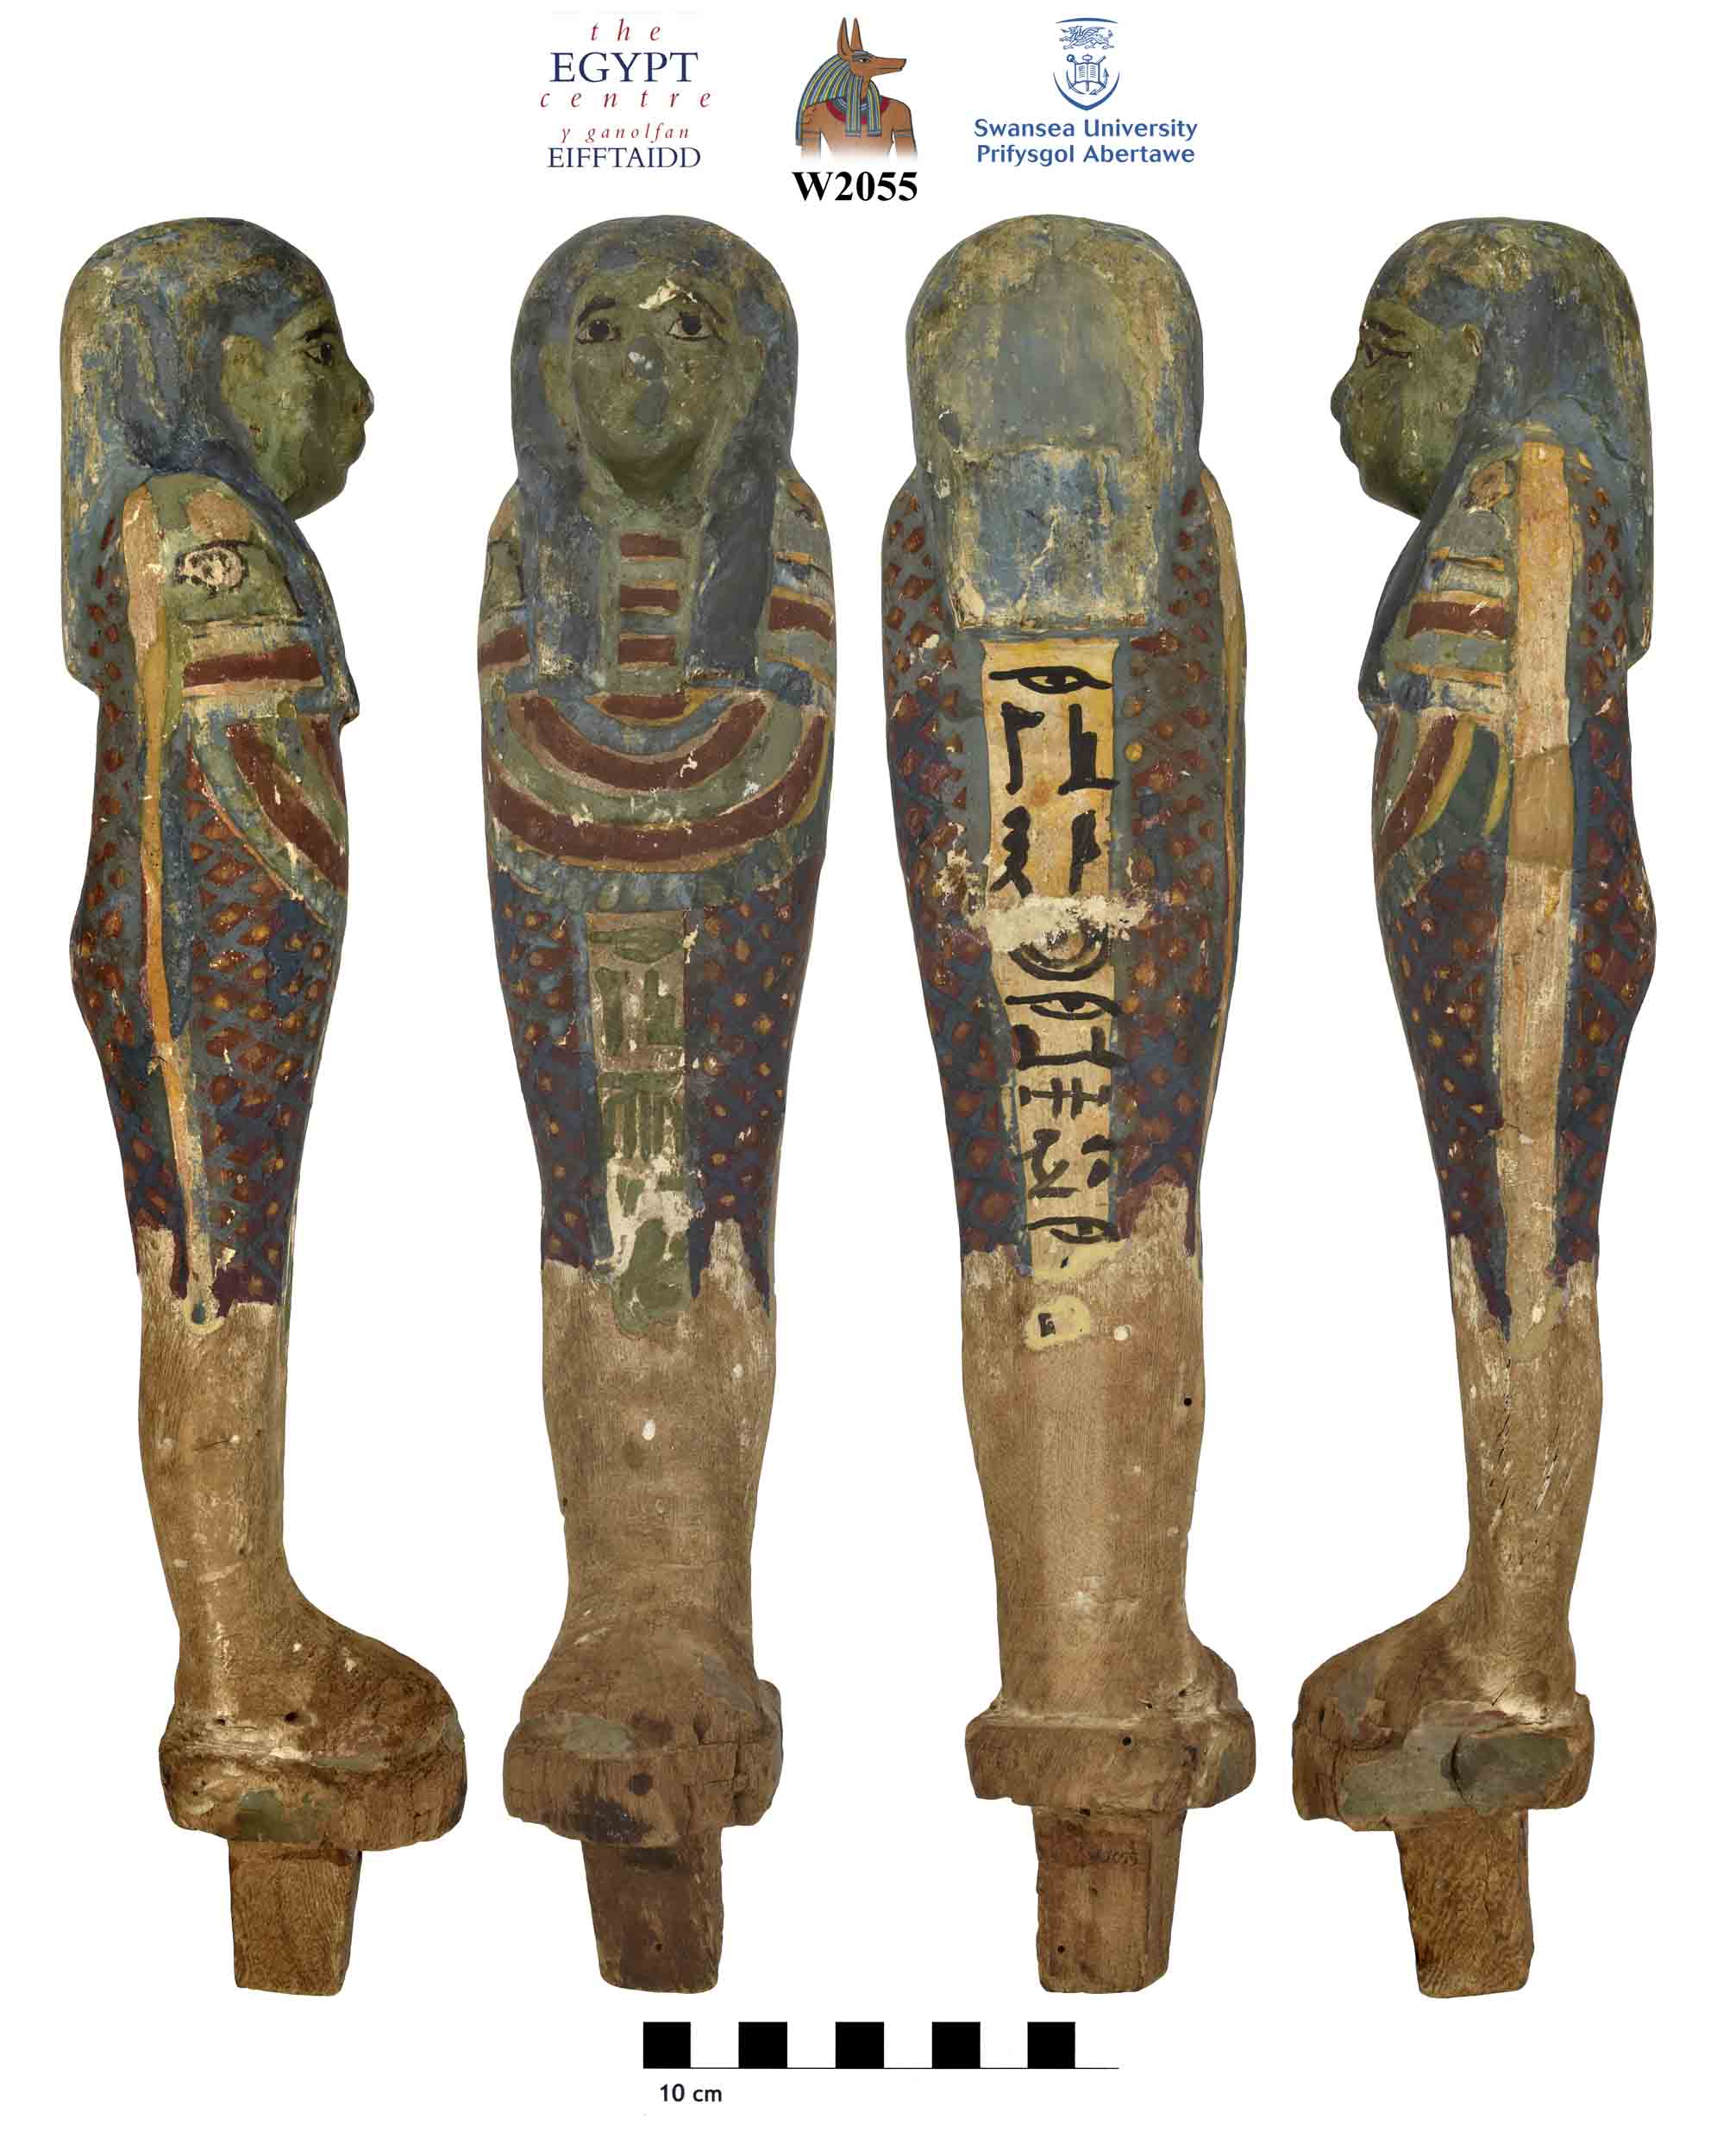 Image for: Ptah-Sokar-Osiris